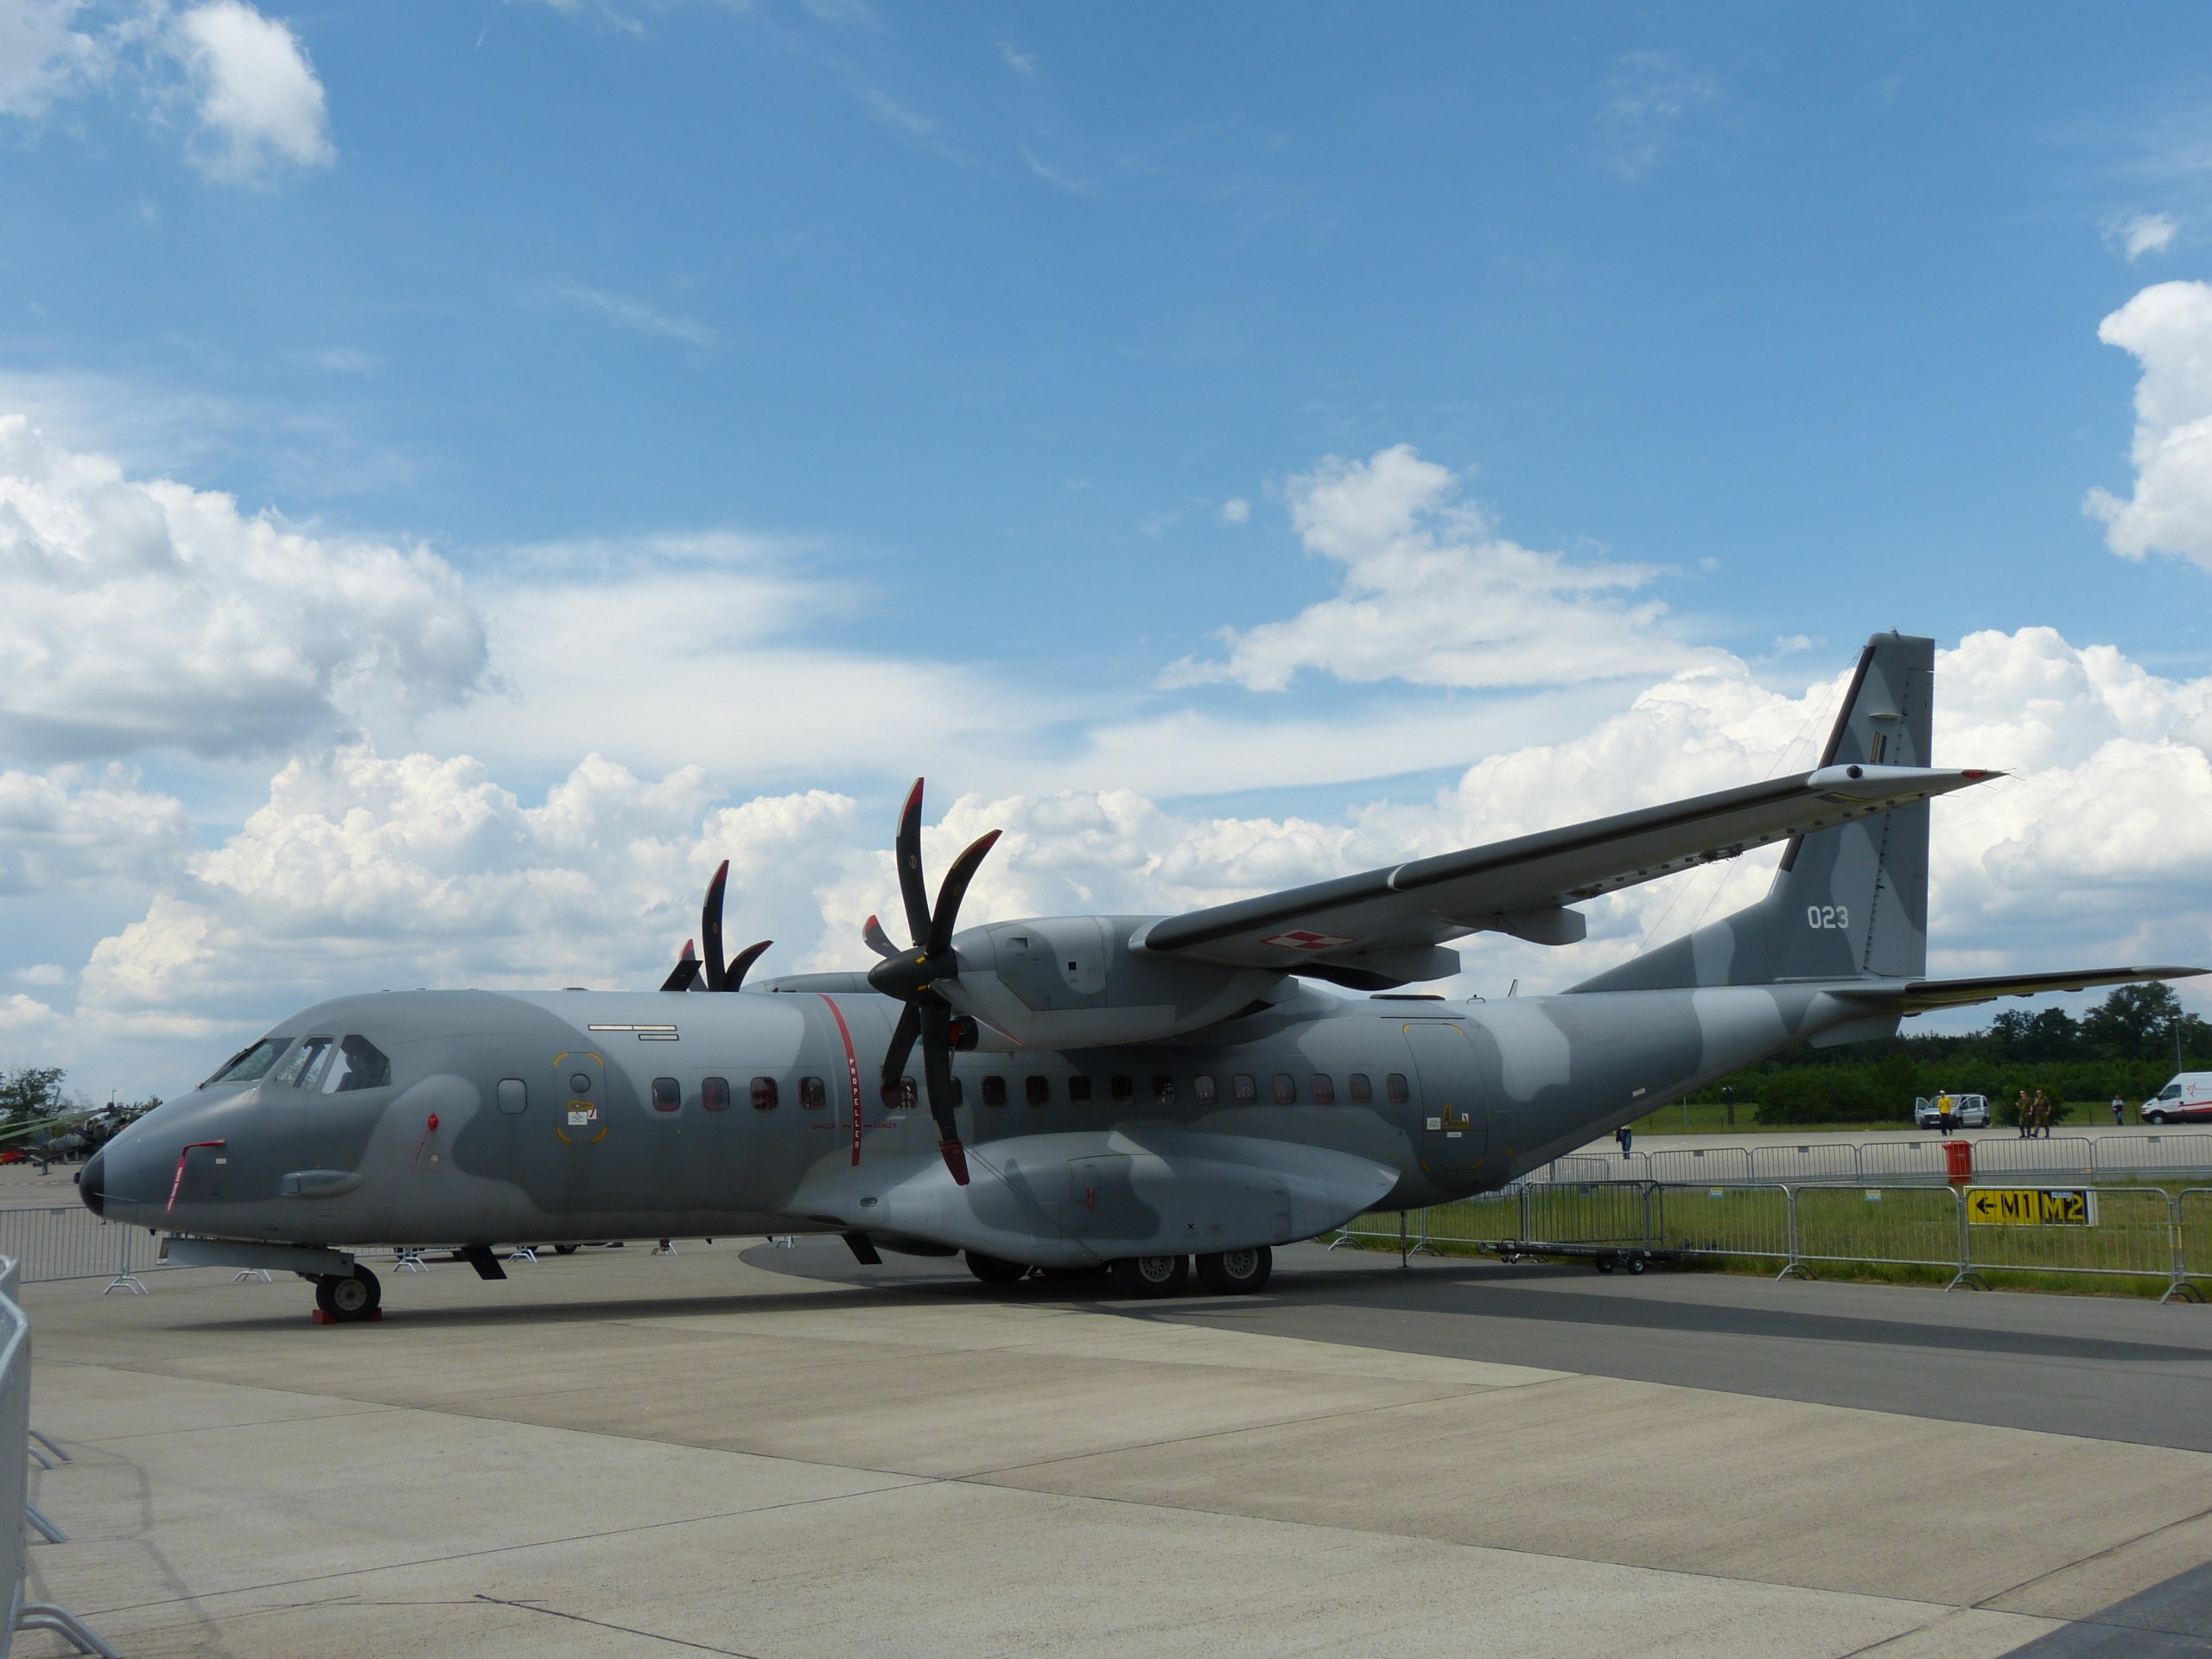 The Polish Air force fleet of Airbus C-295M